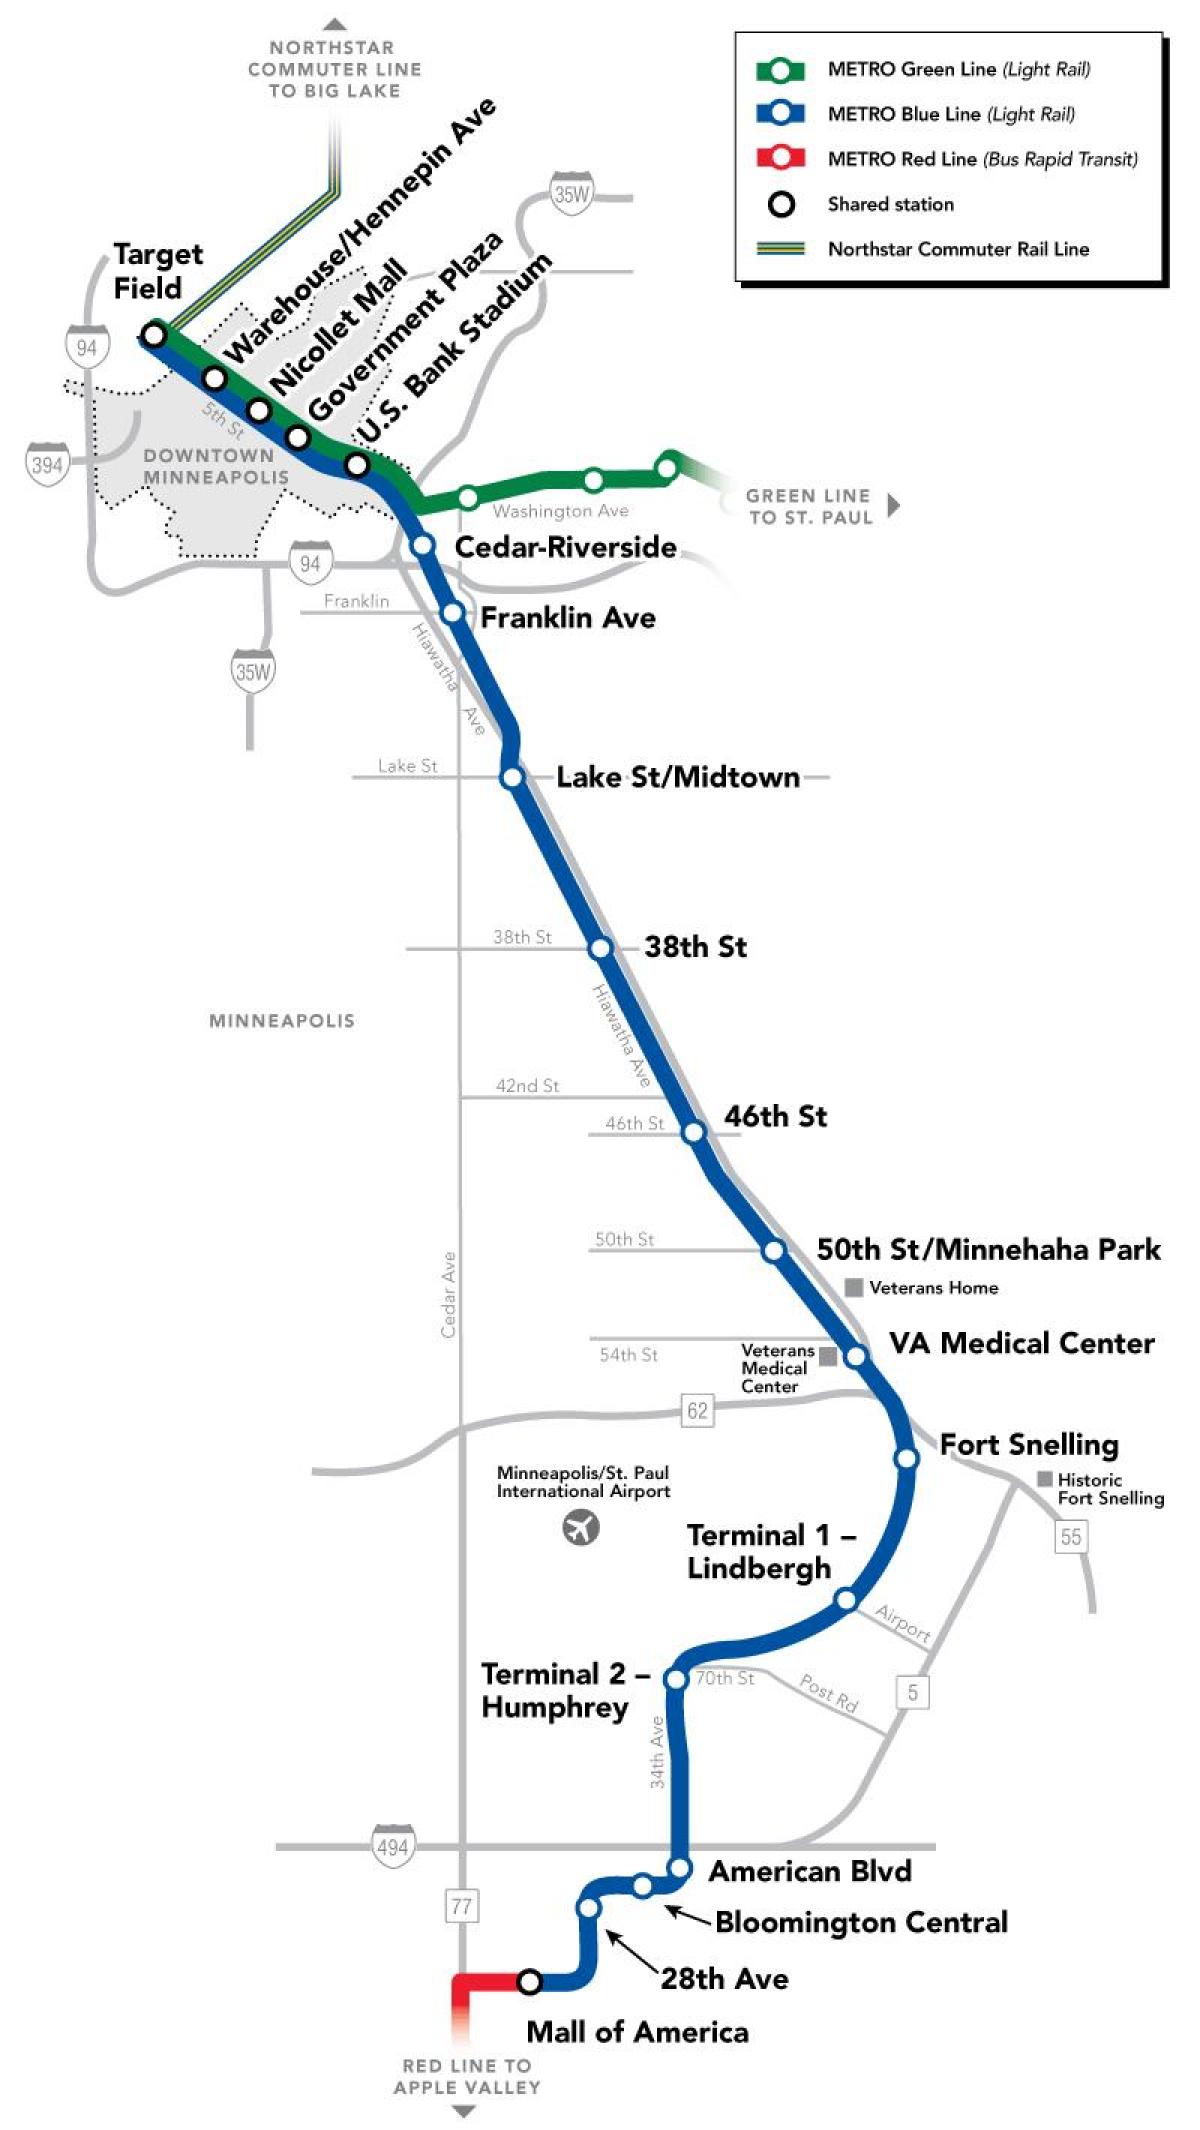 Washington metro plava linija na karti